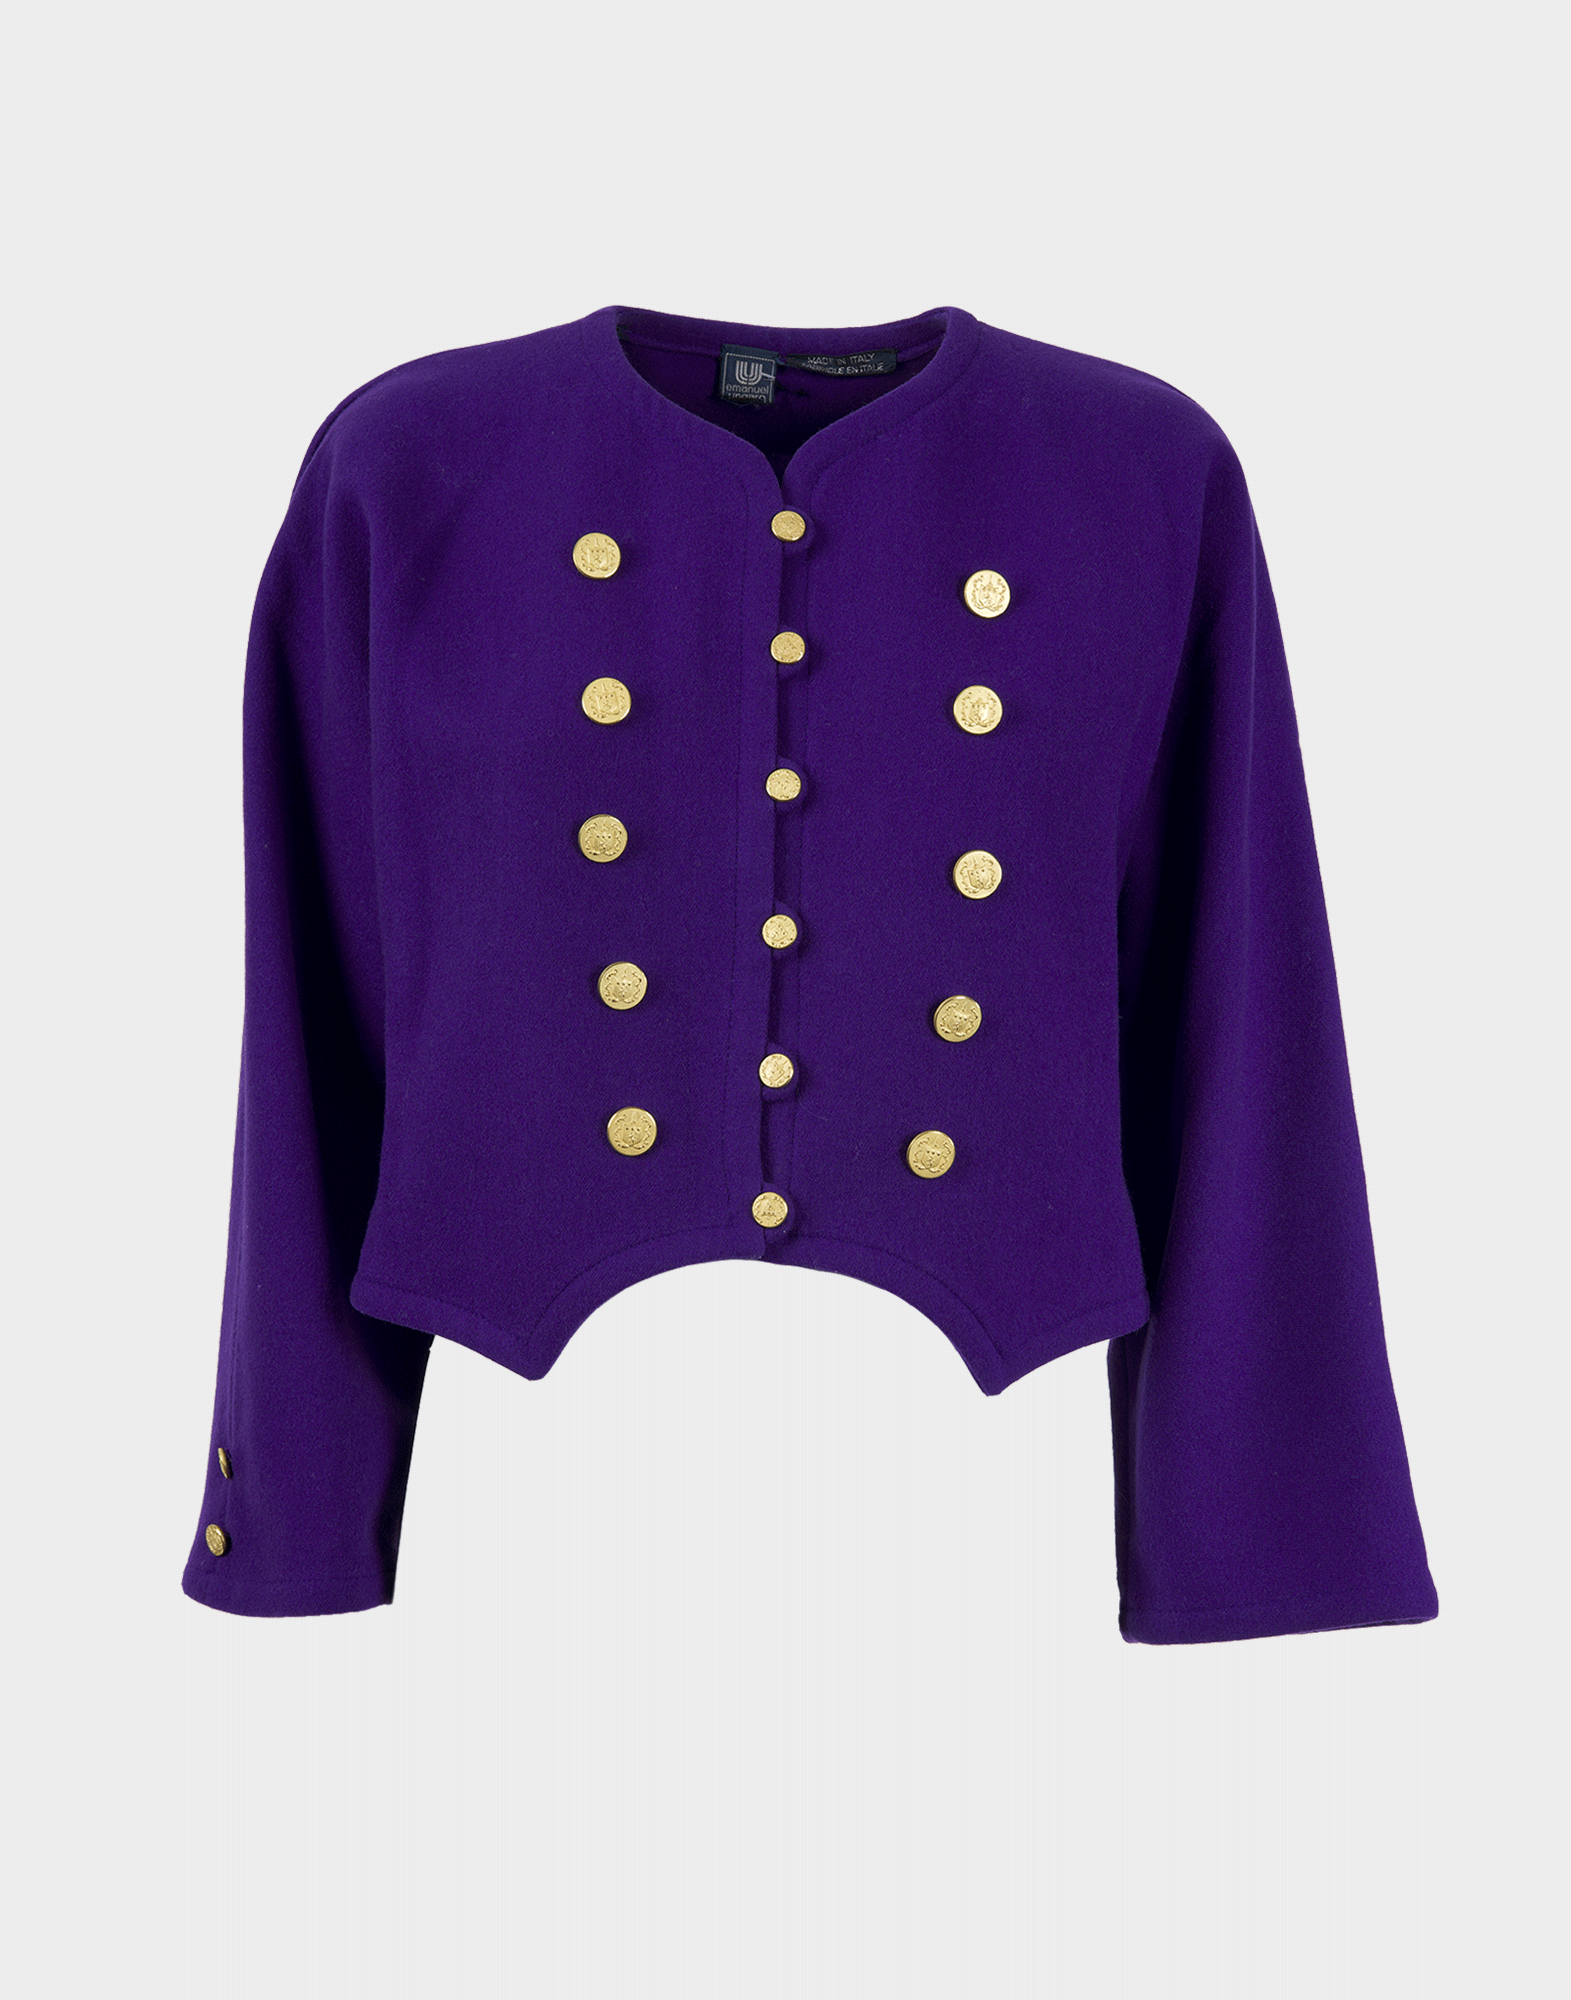 Women's short purple jacket with an asymmetric cut and gold button details